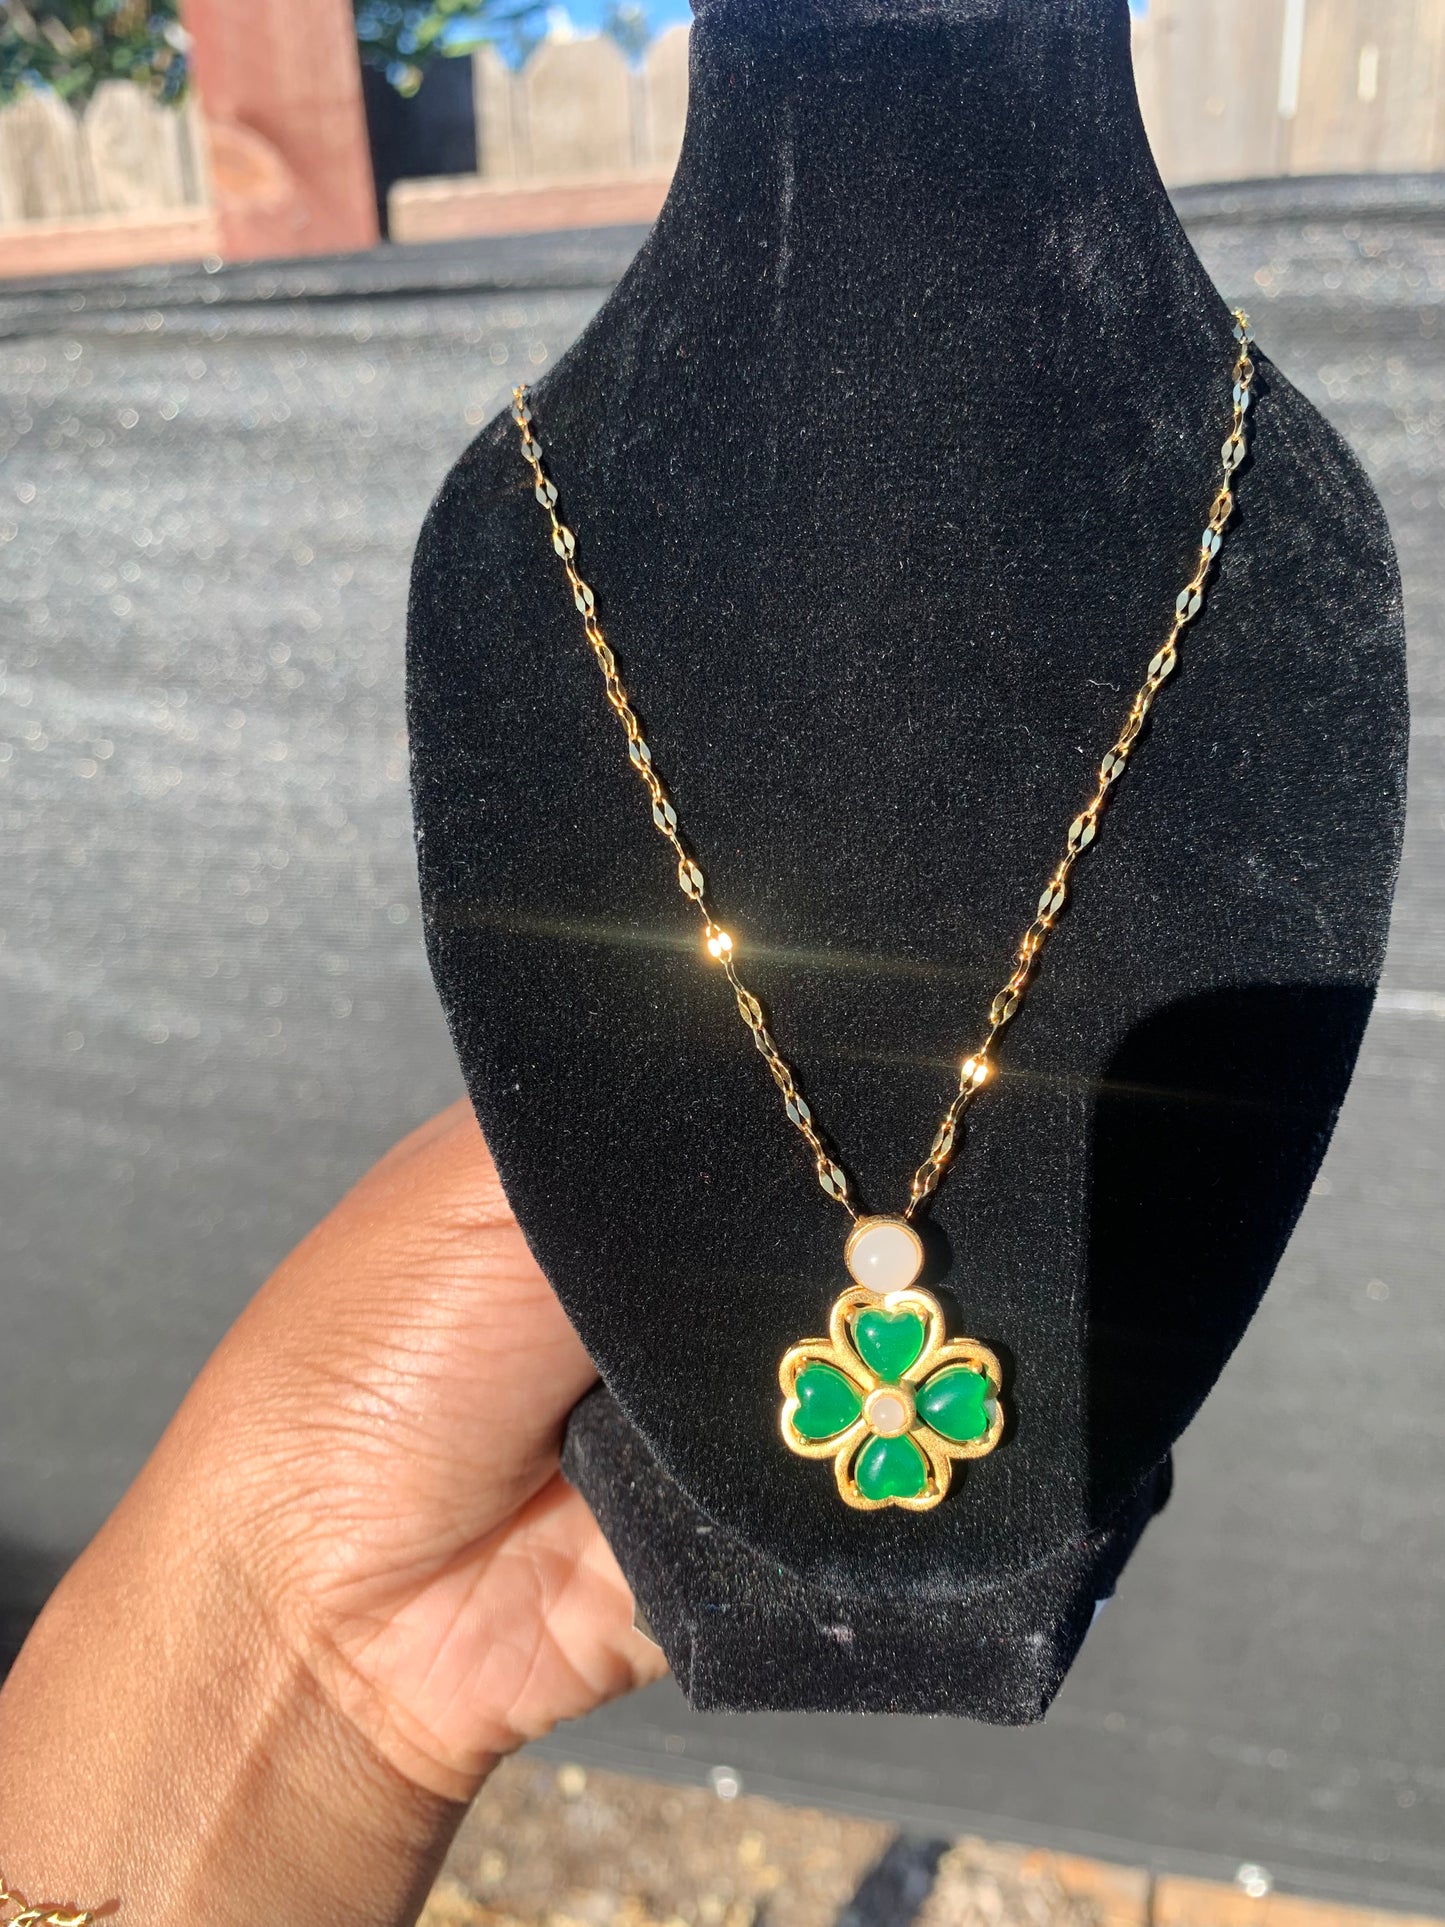 Clover jade necklace